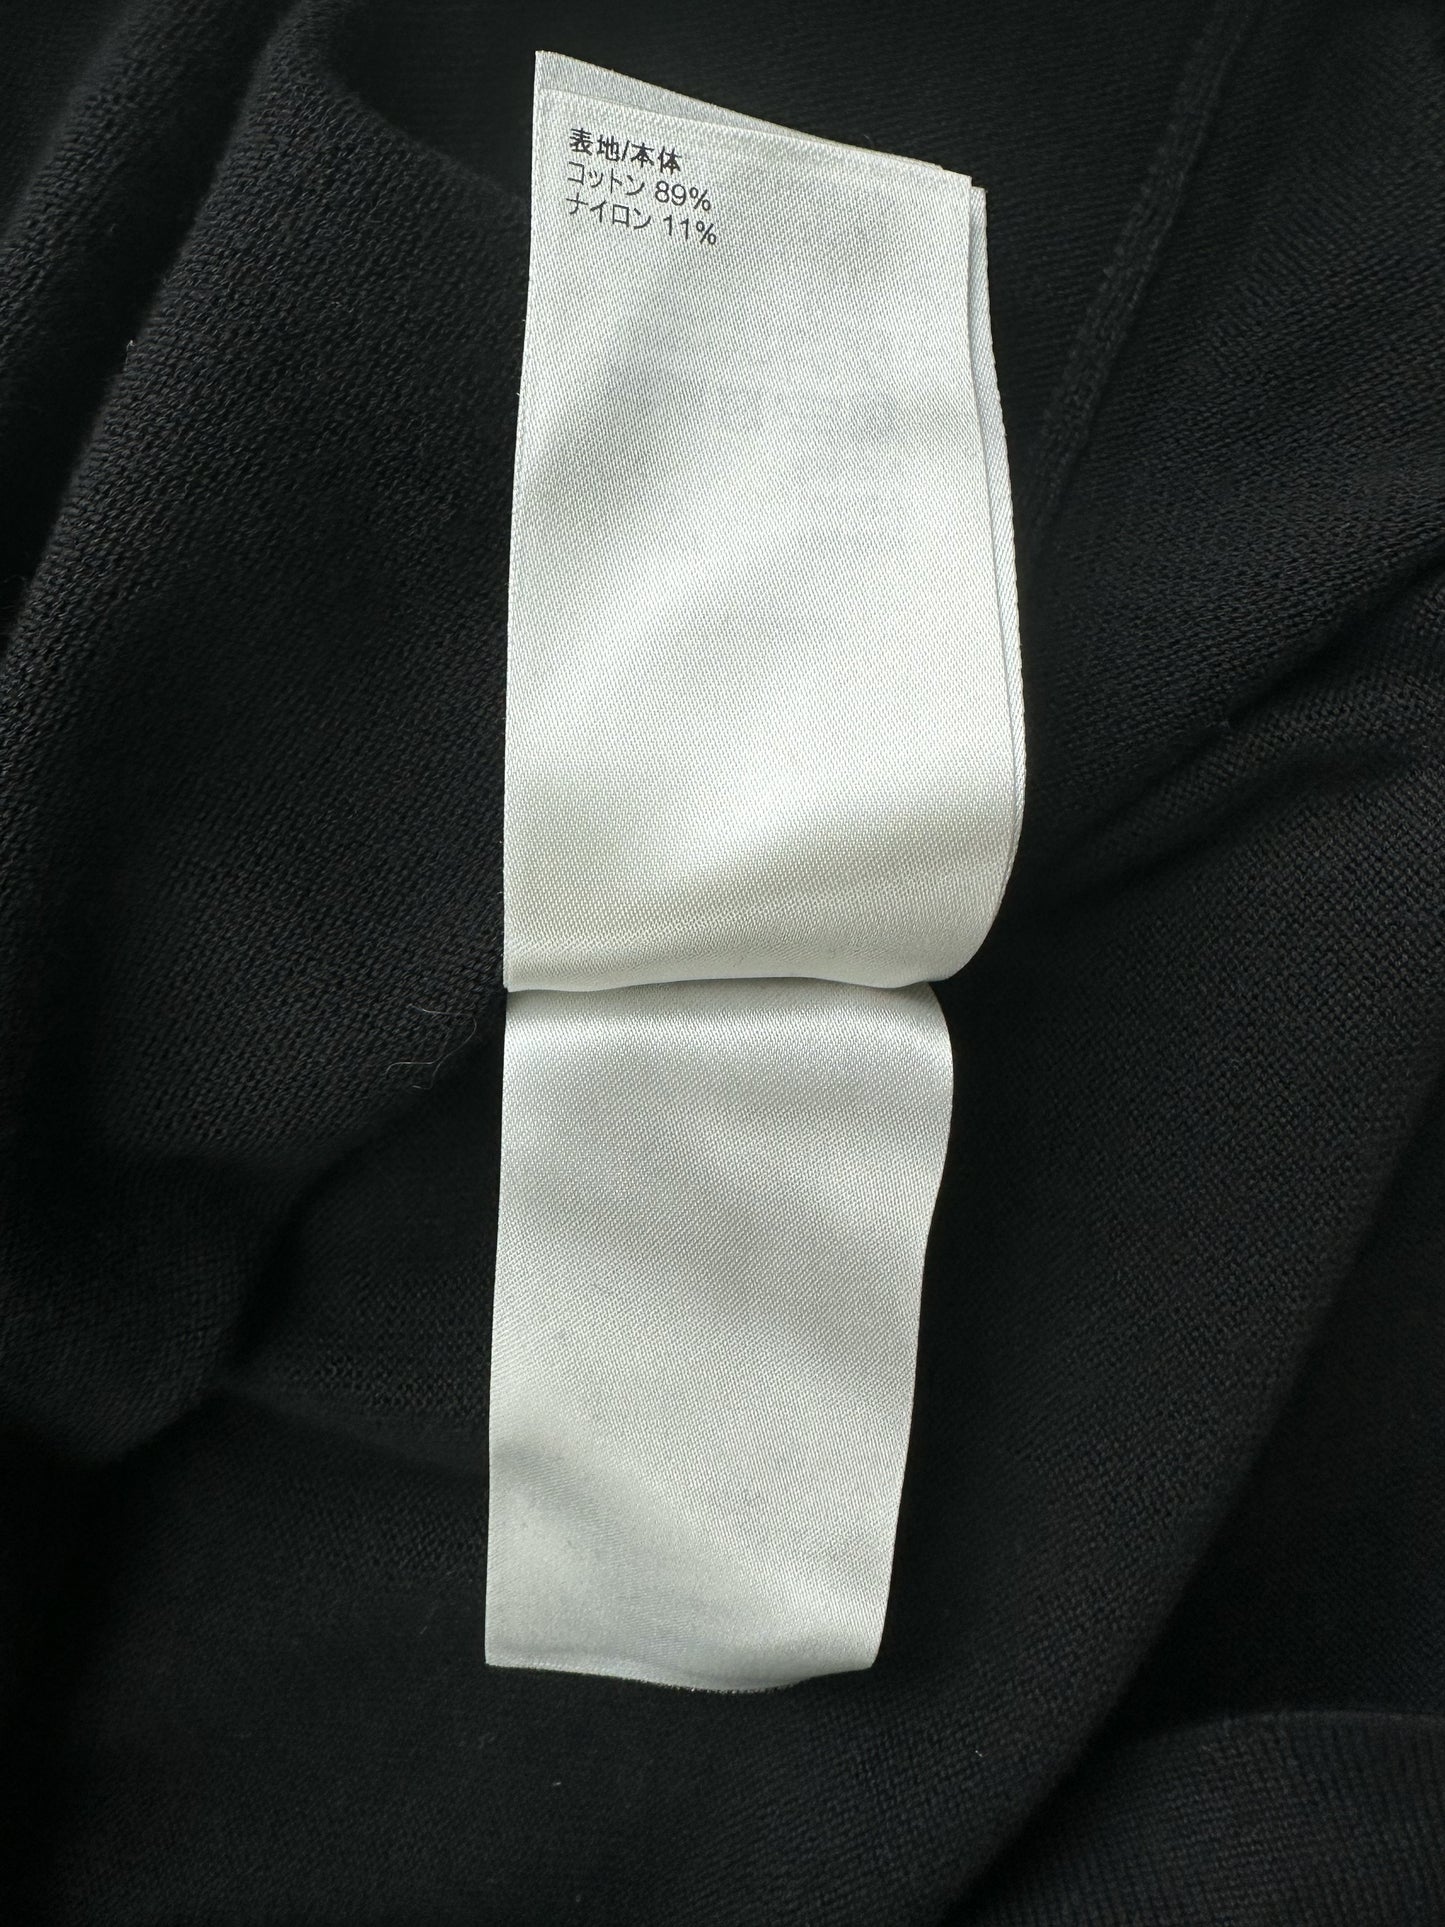 Louis Vuitton Black & Green 1854 Knit T-Shirt – Savonches